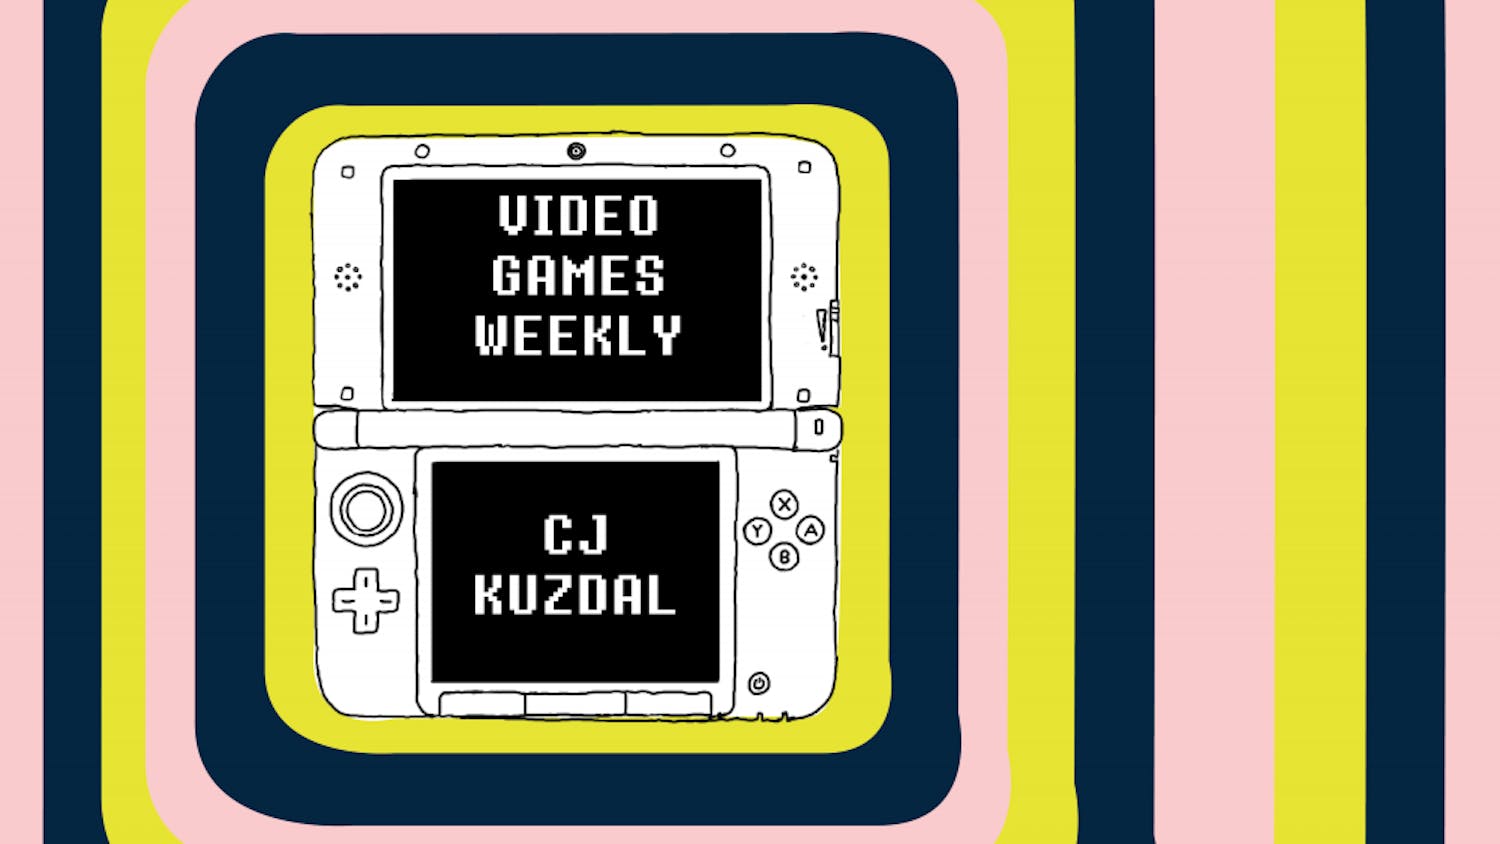 Video-Games-Weekly-Logo